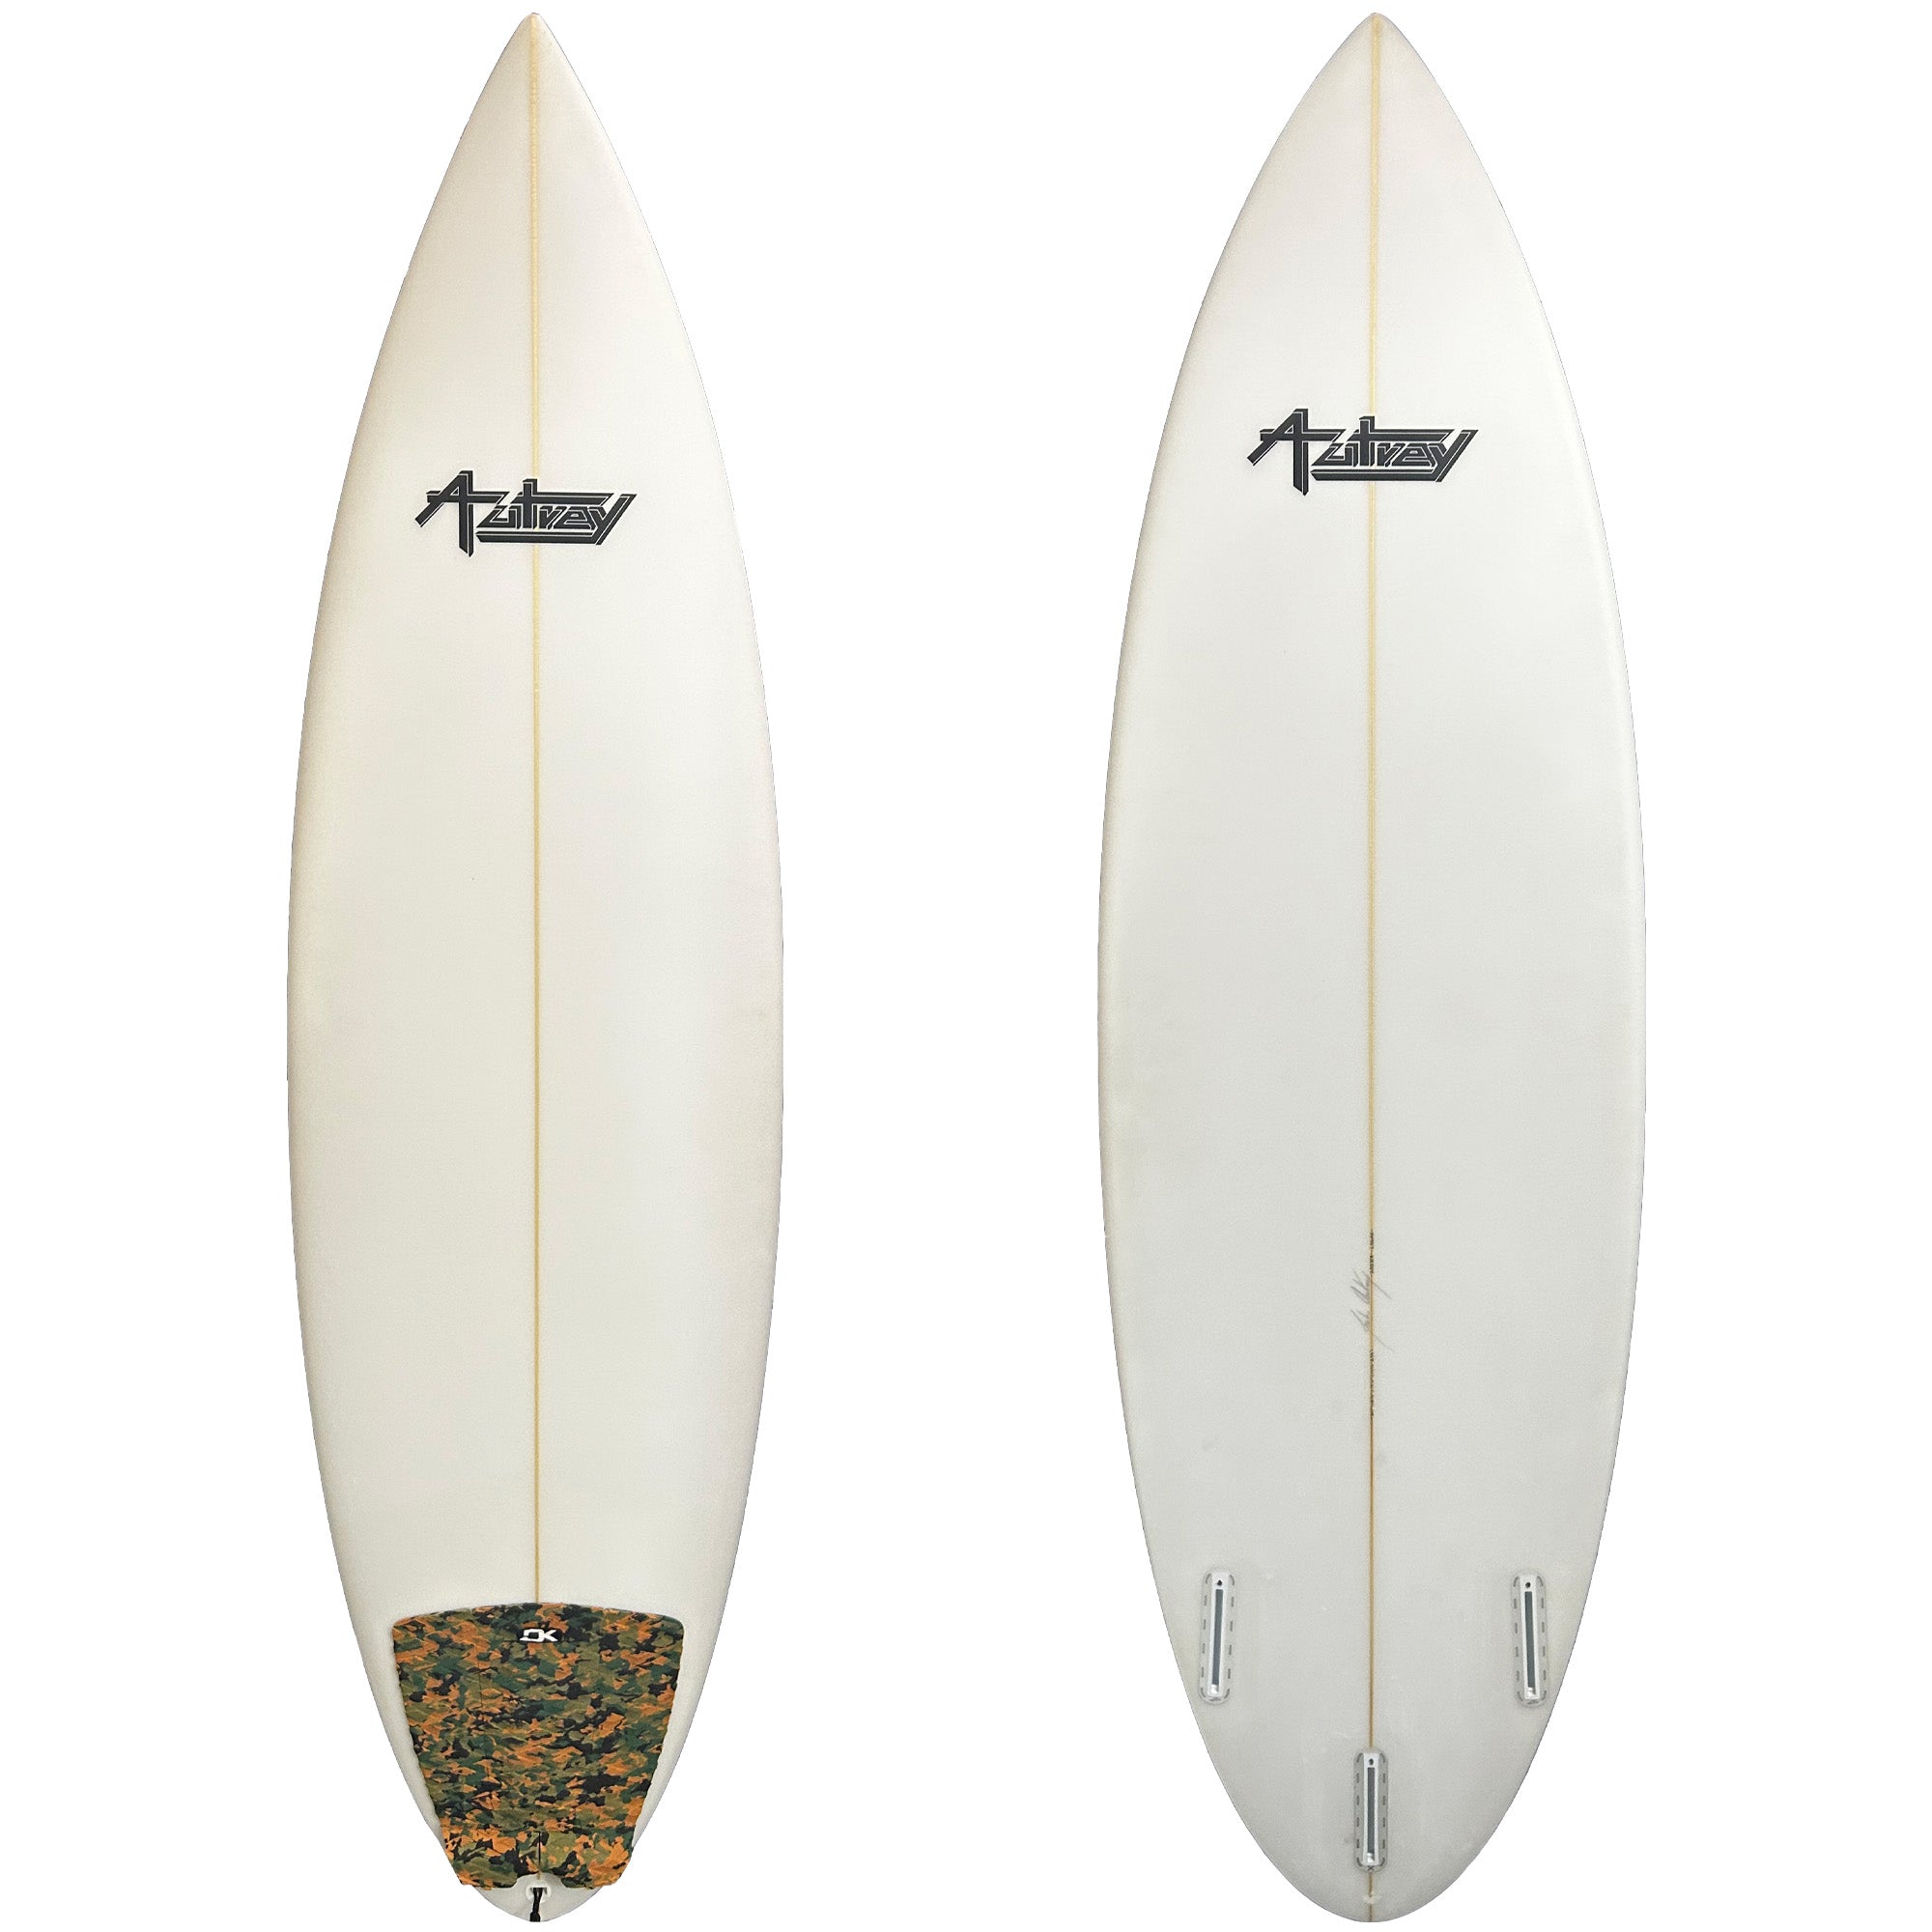 Autrey 6'1 Consignment Surfboard